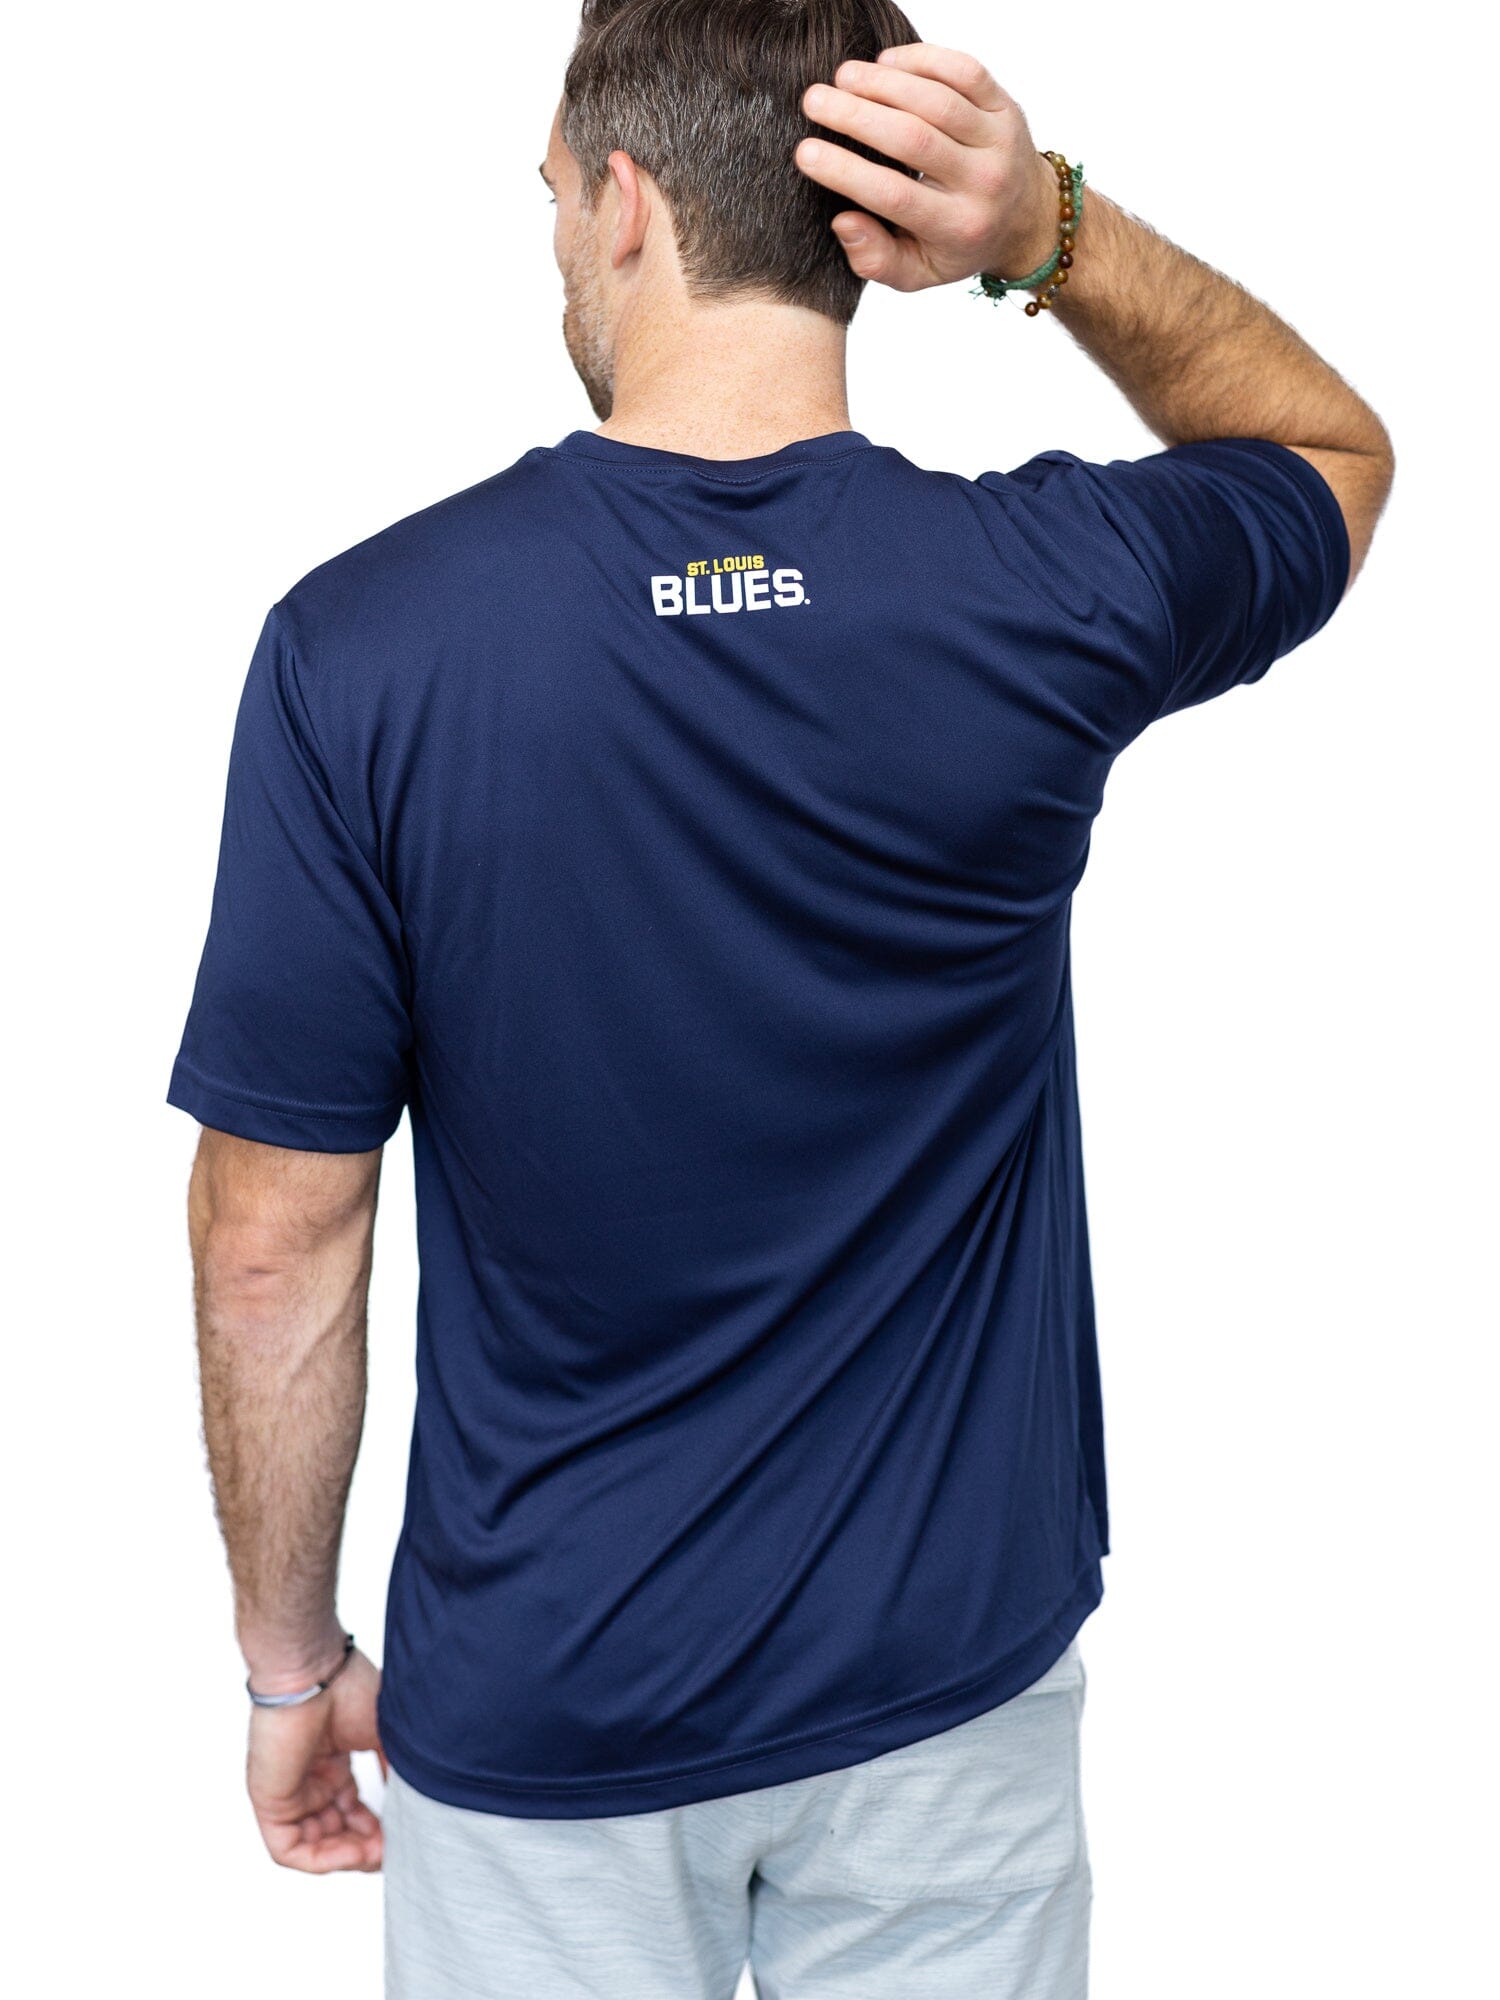 St. Louis Blues "Full Fandom" Moisture Wicking T-Shirt - Back